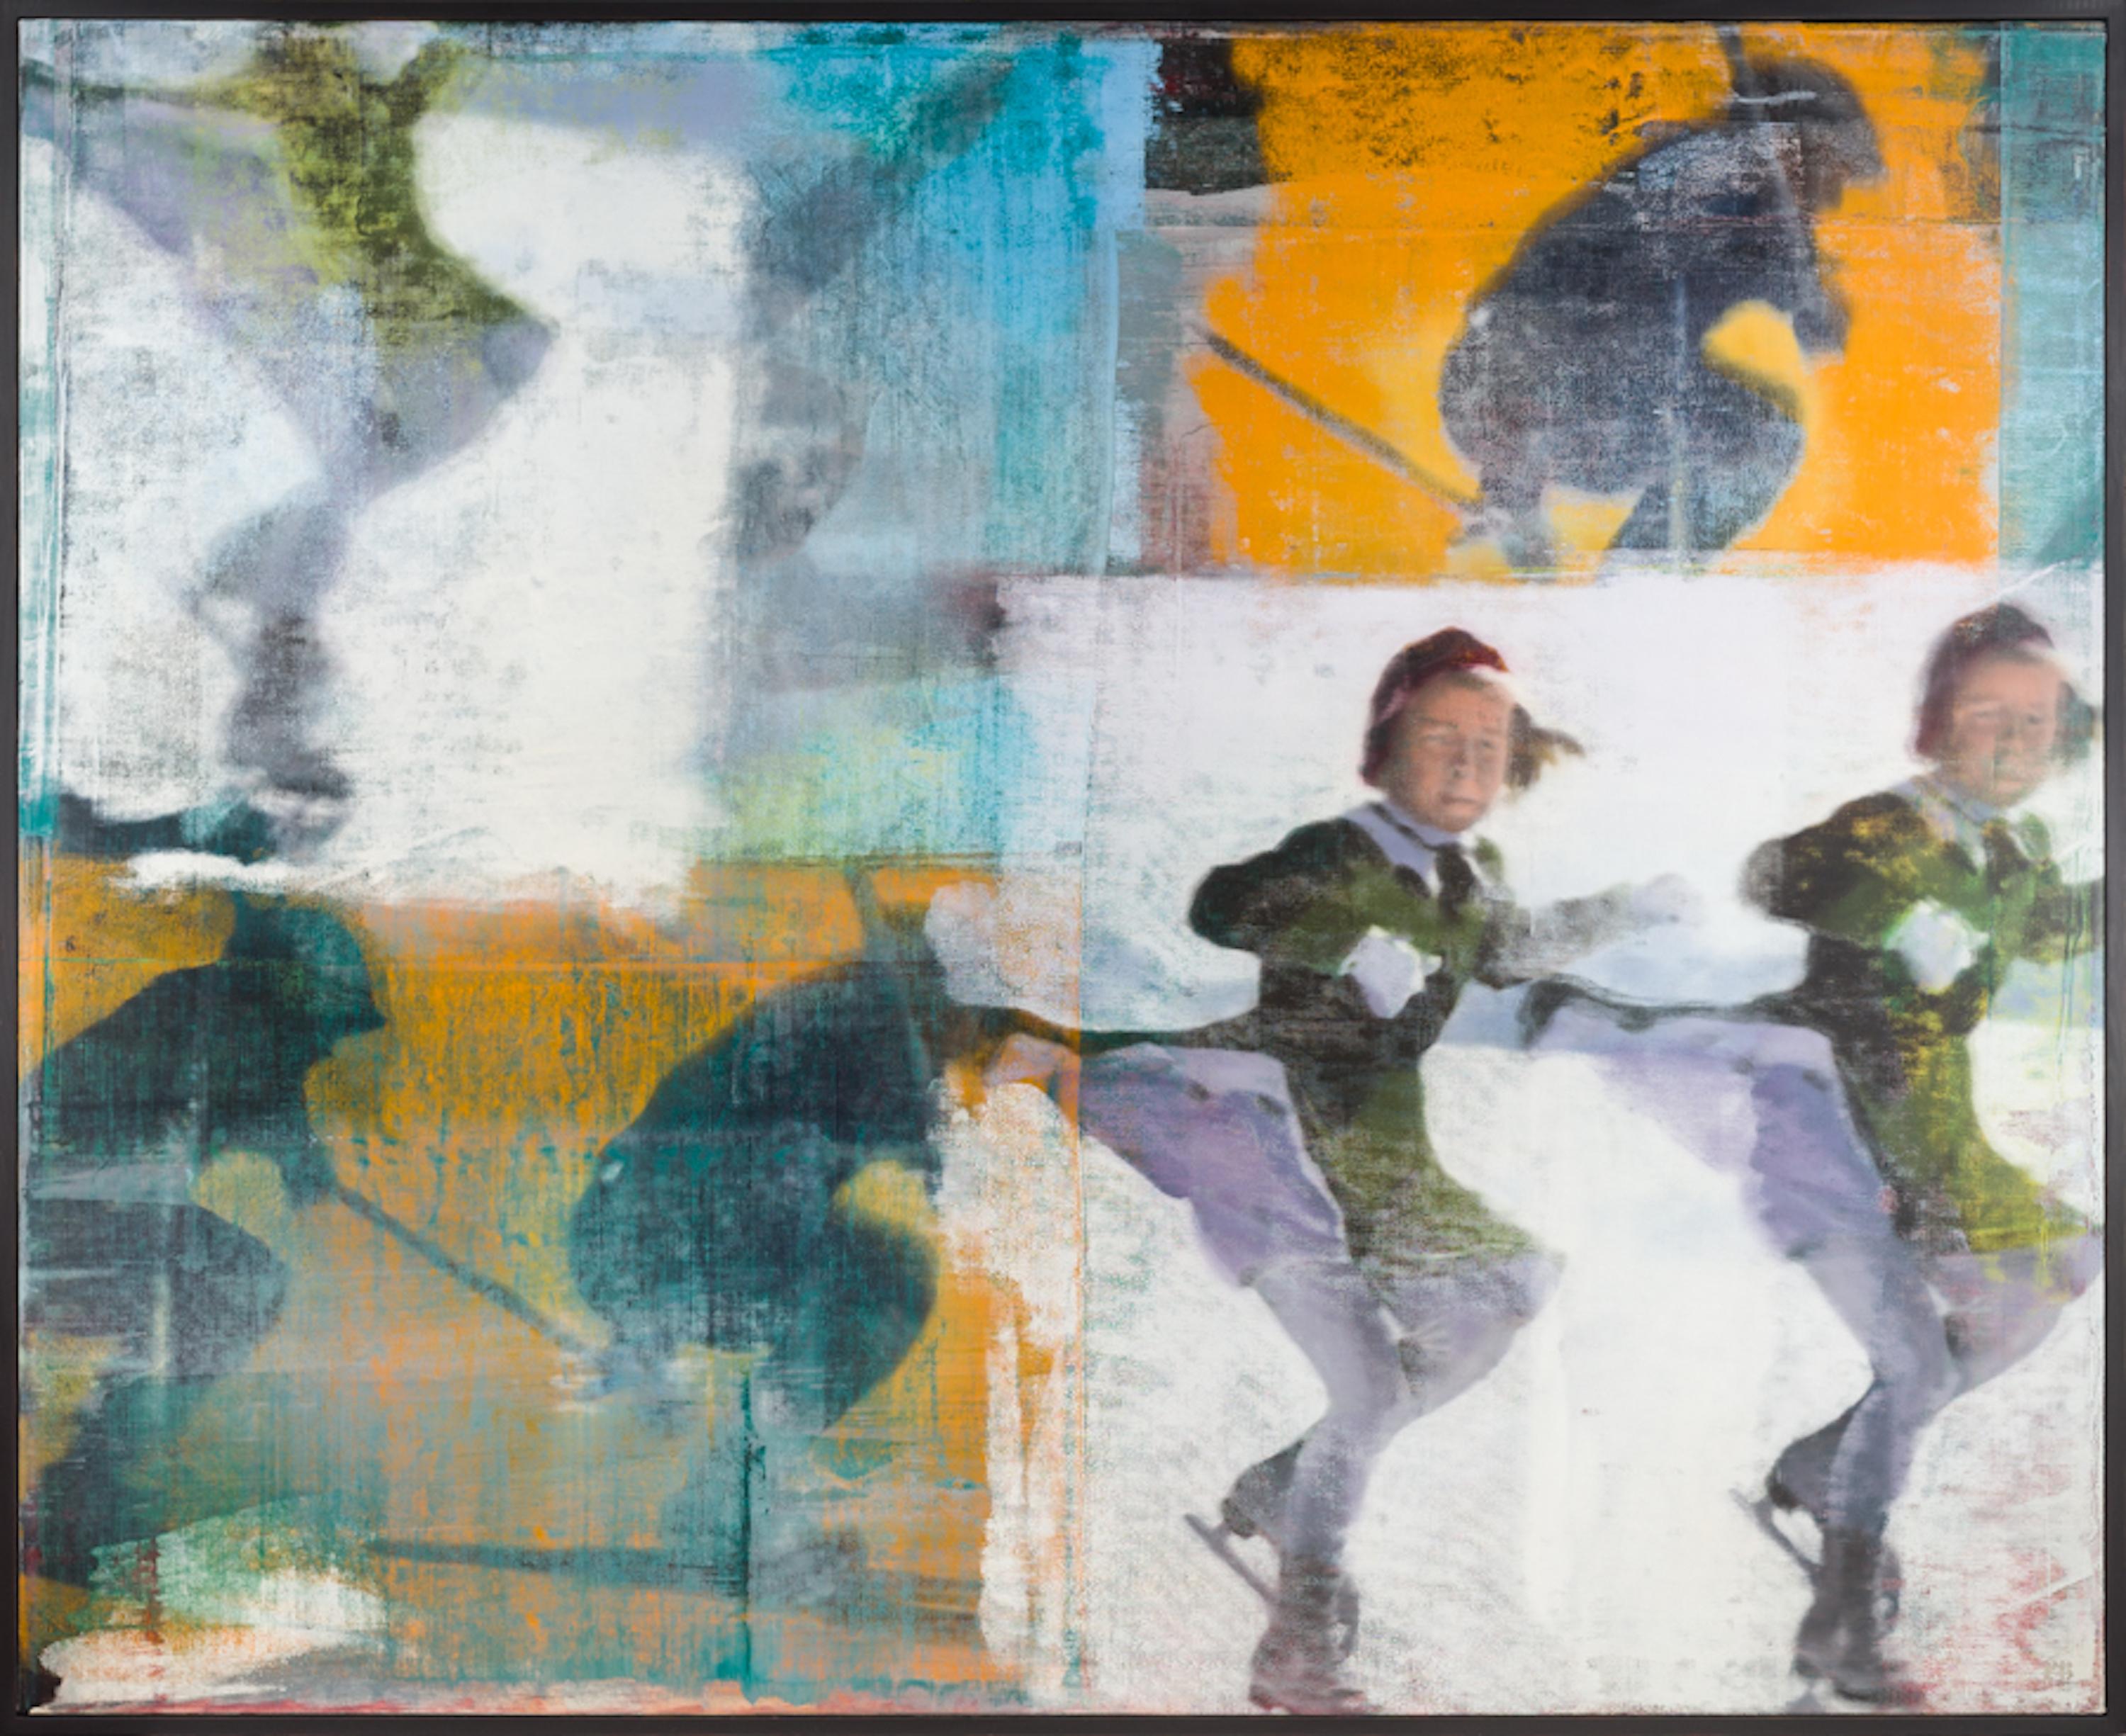 Philip Buller Figurative Painting – "Jumpers" Contemporary Figurative Abstraktes Öl auf Leinen auf Panel Gerahmte Malerei